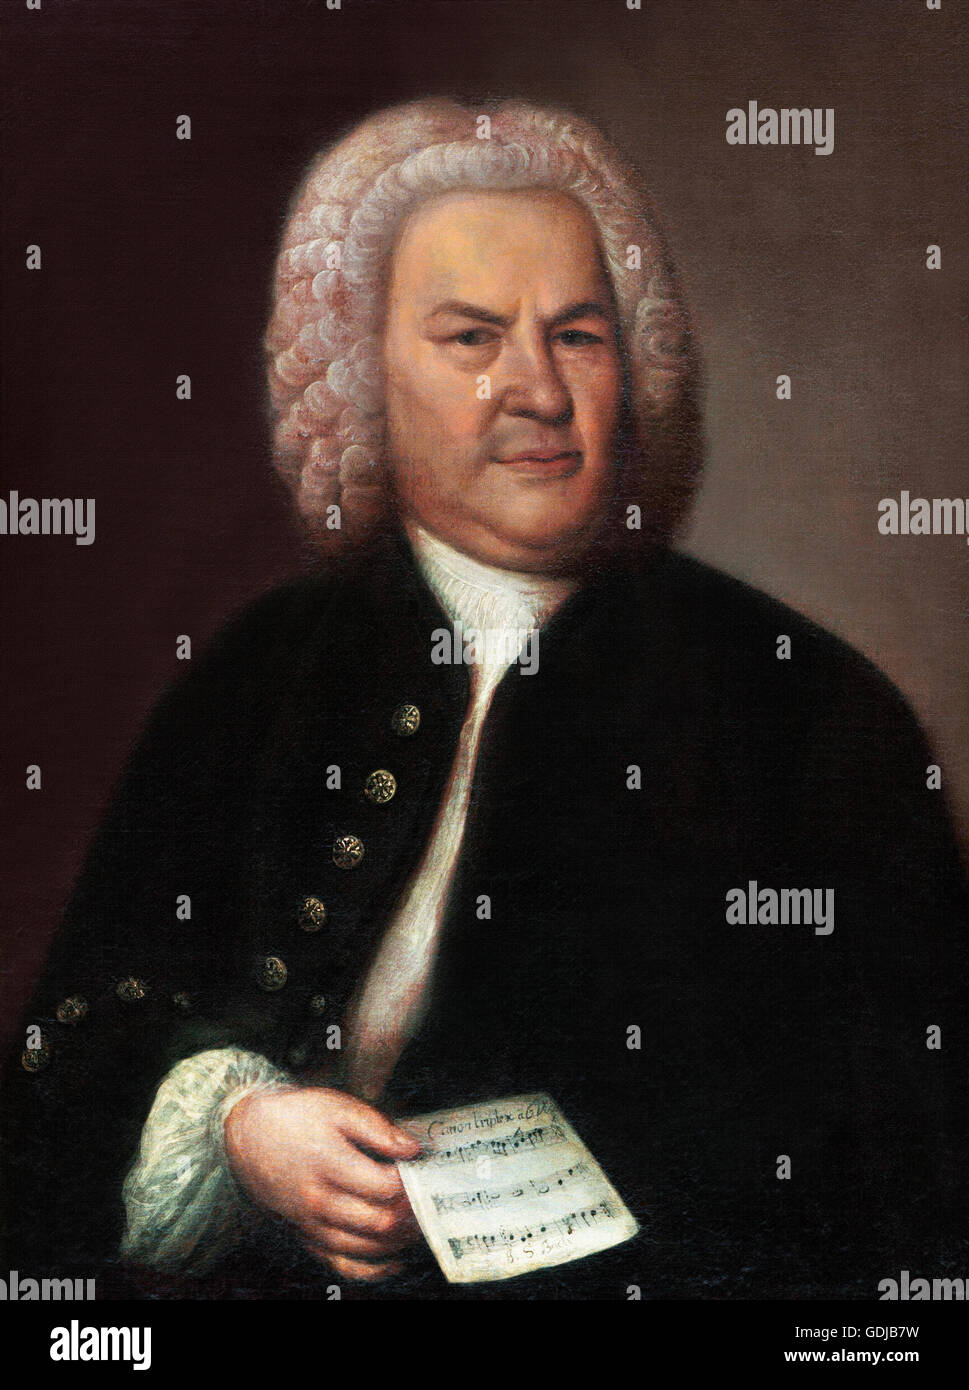 Johann Sebastian Bach. The German Baroque composer, J S Bach (1685-1750). Portrait by Elias Gottlob Haußmann, 1746. Stock Photo